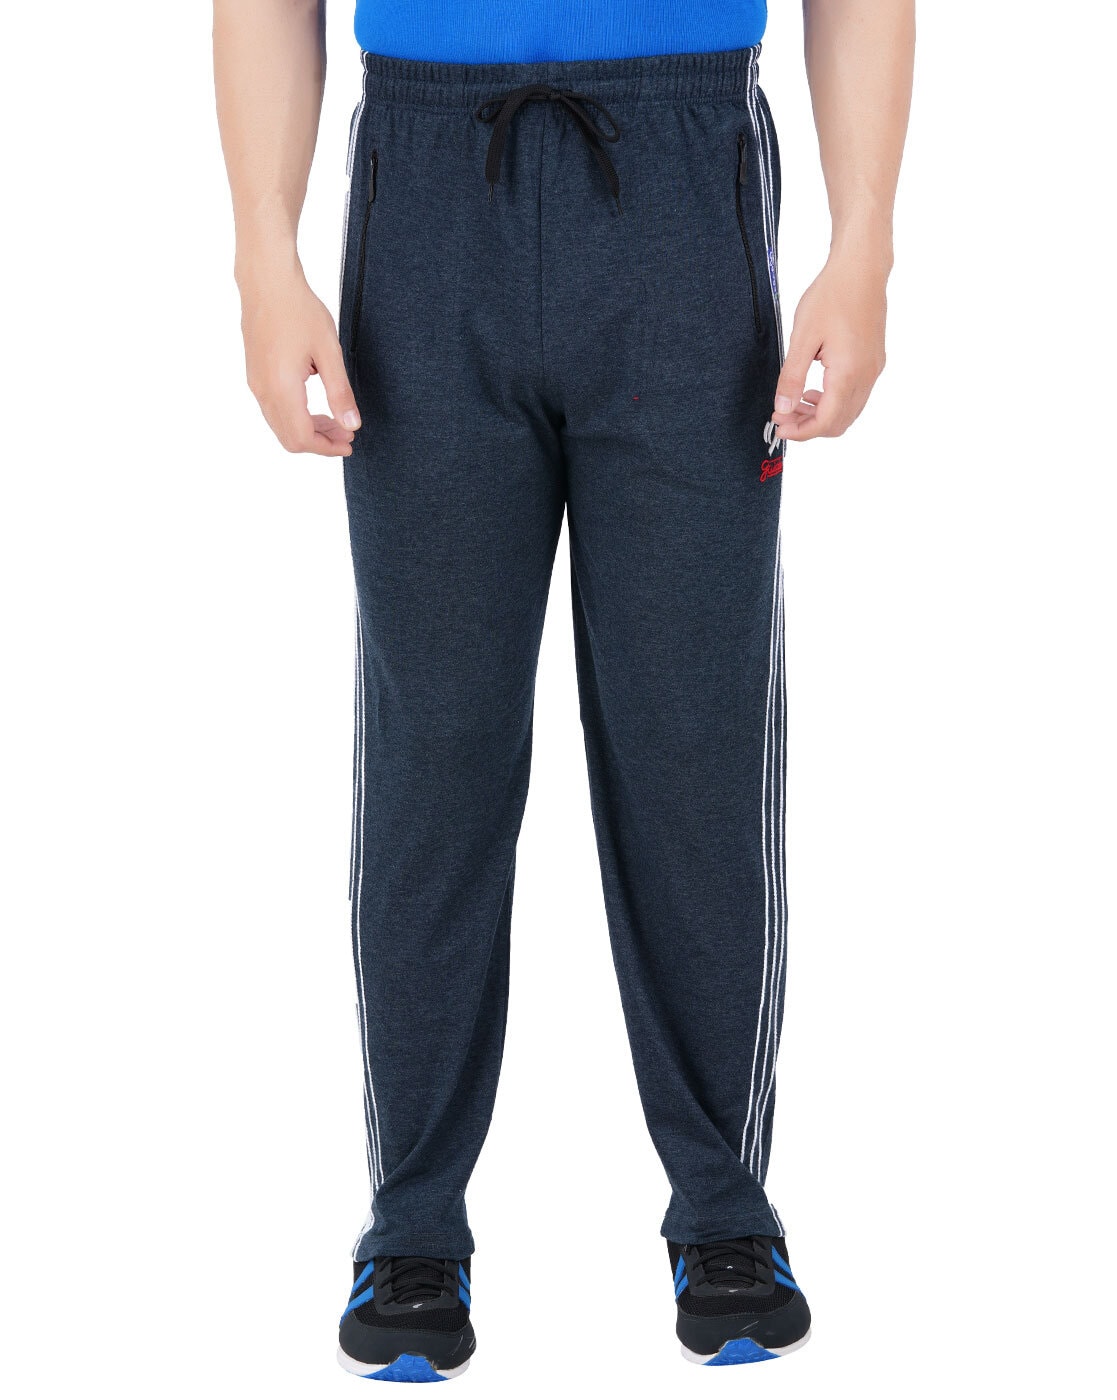 Aayomet Mens Ski Pants Men's Track Pants,Slim Fit Sweatpants Joggers with  Zipper Pockets,Navy XL - Walmart.com